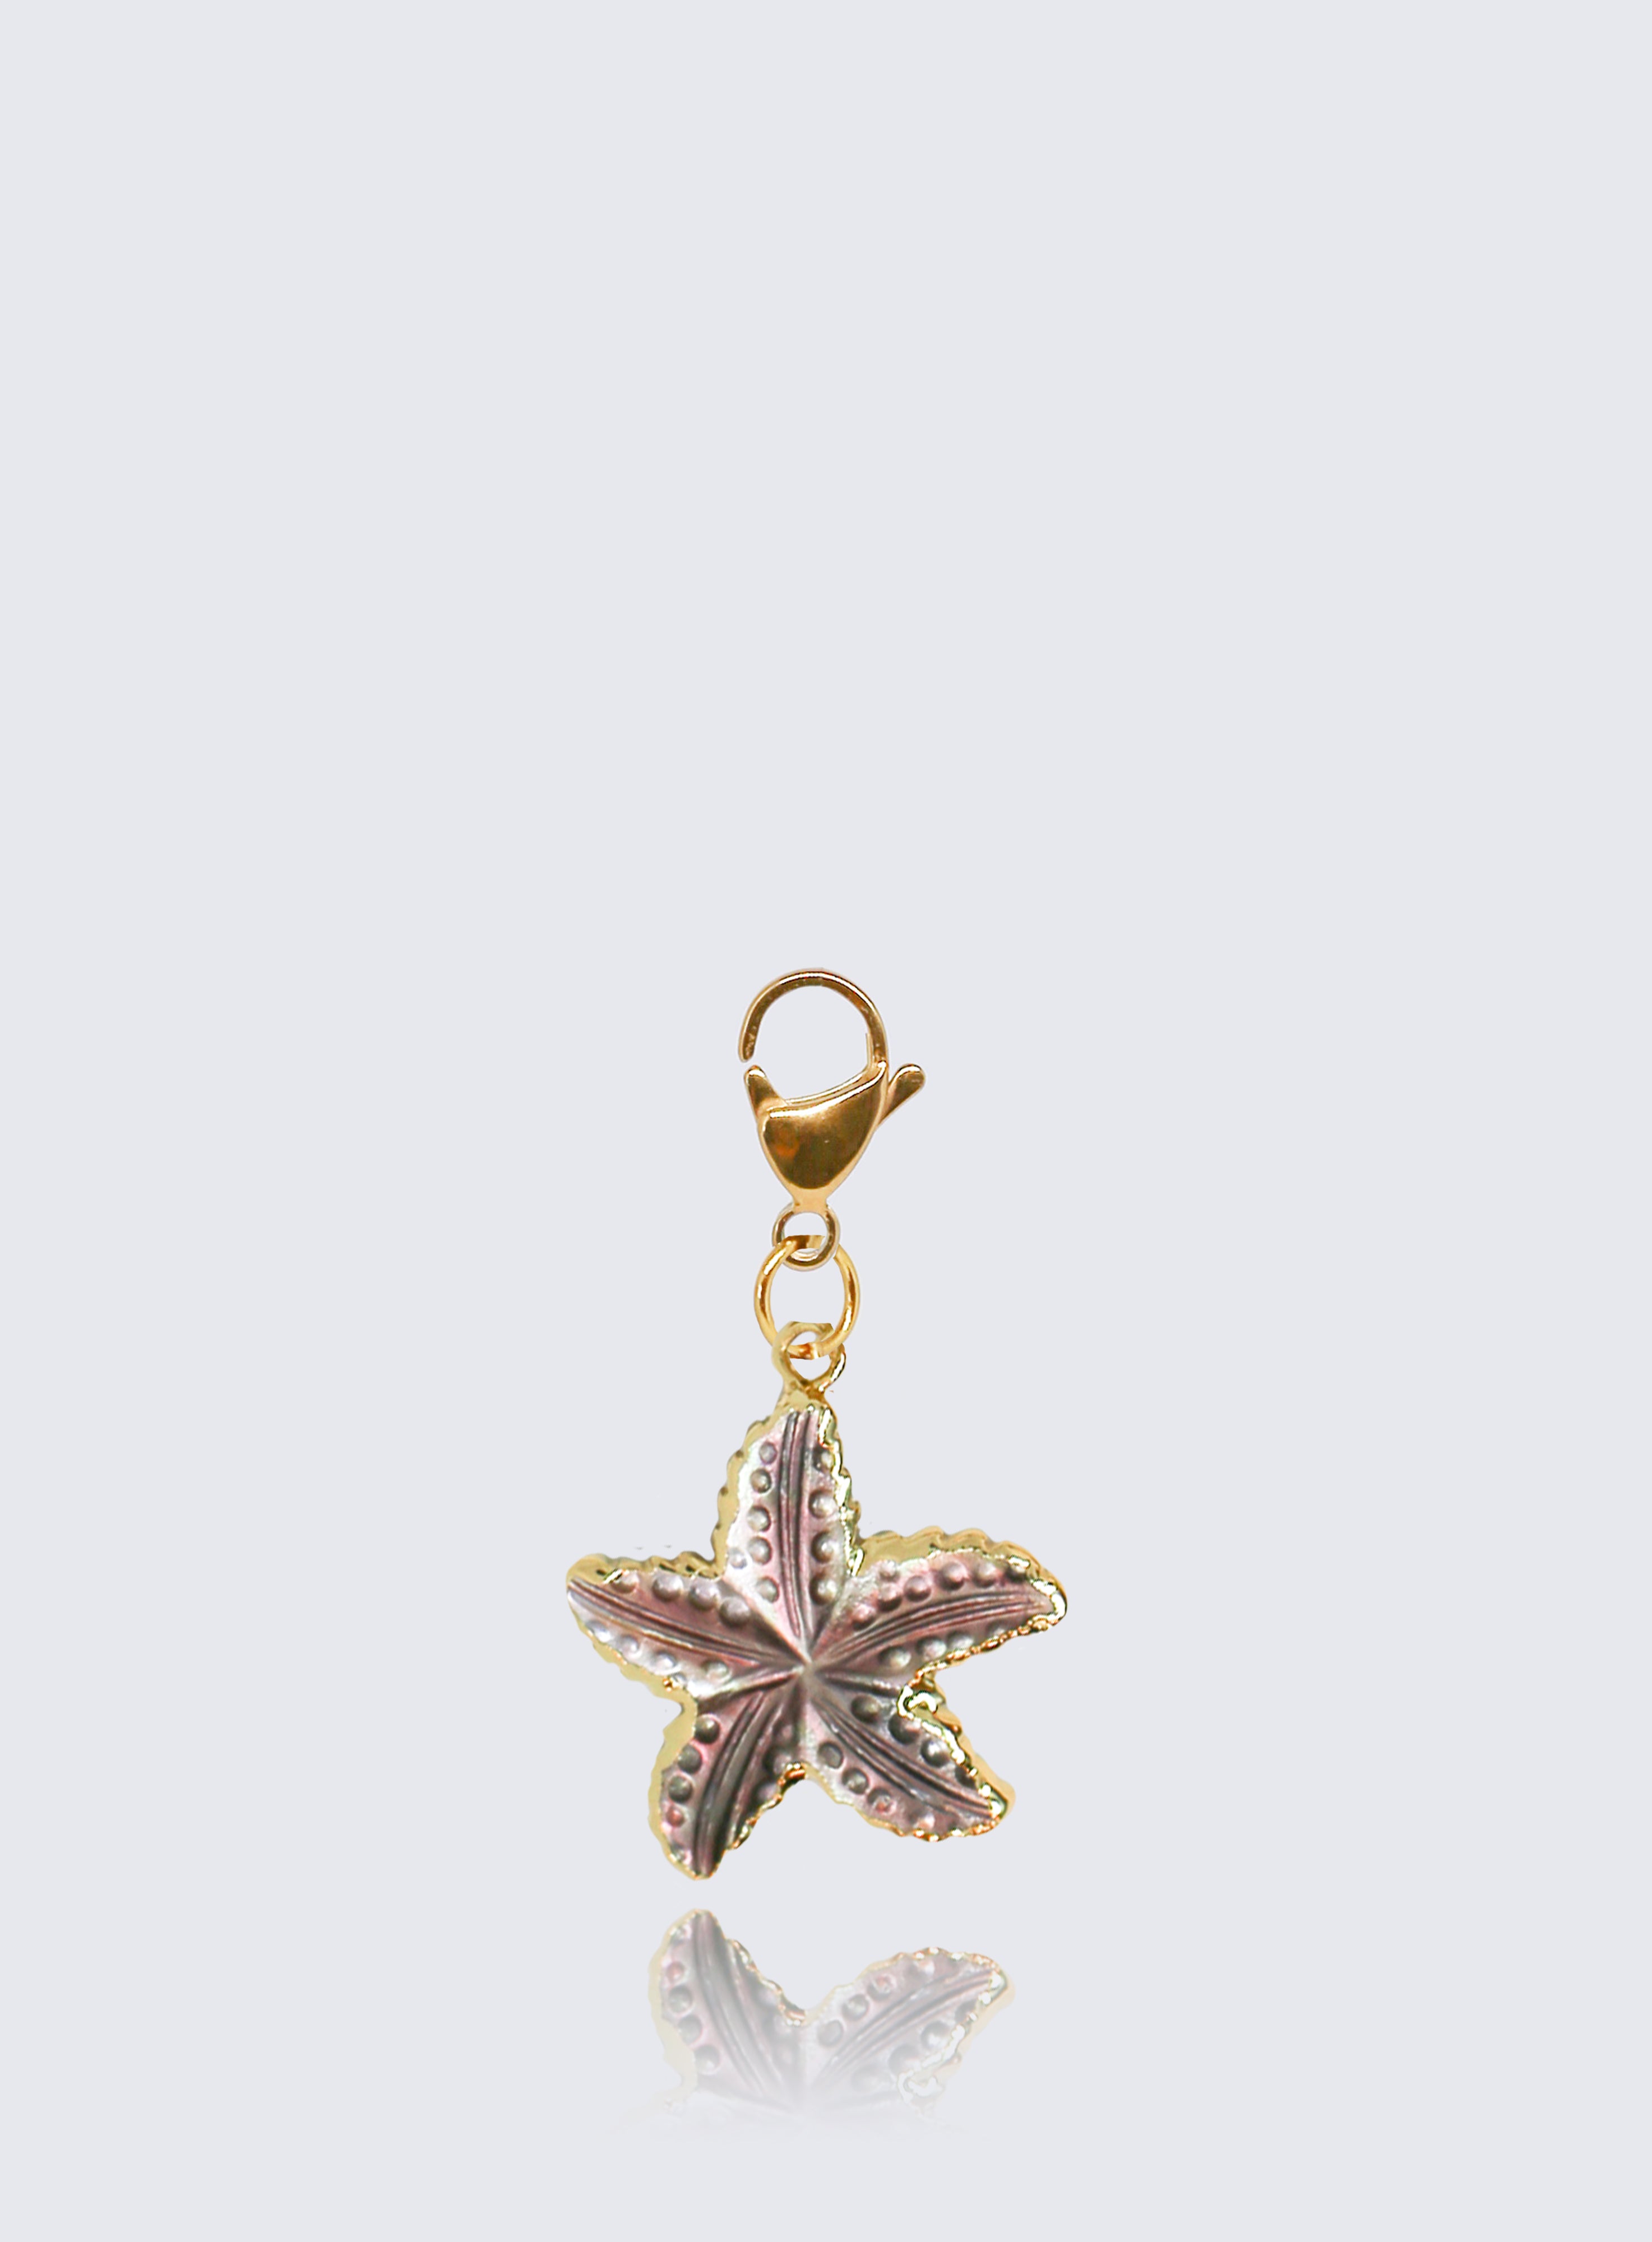 Sea star pendant